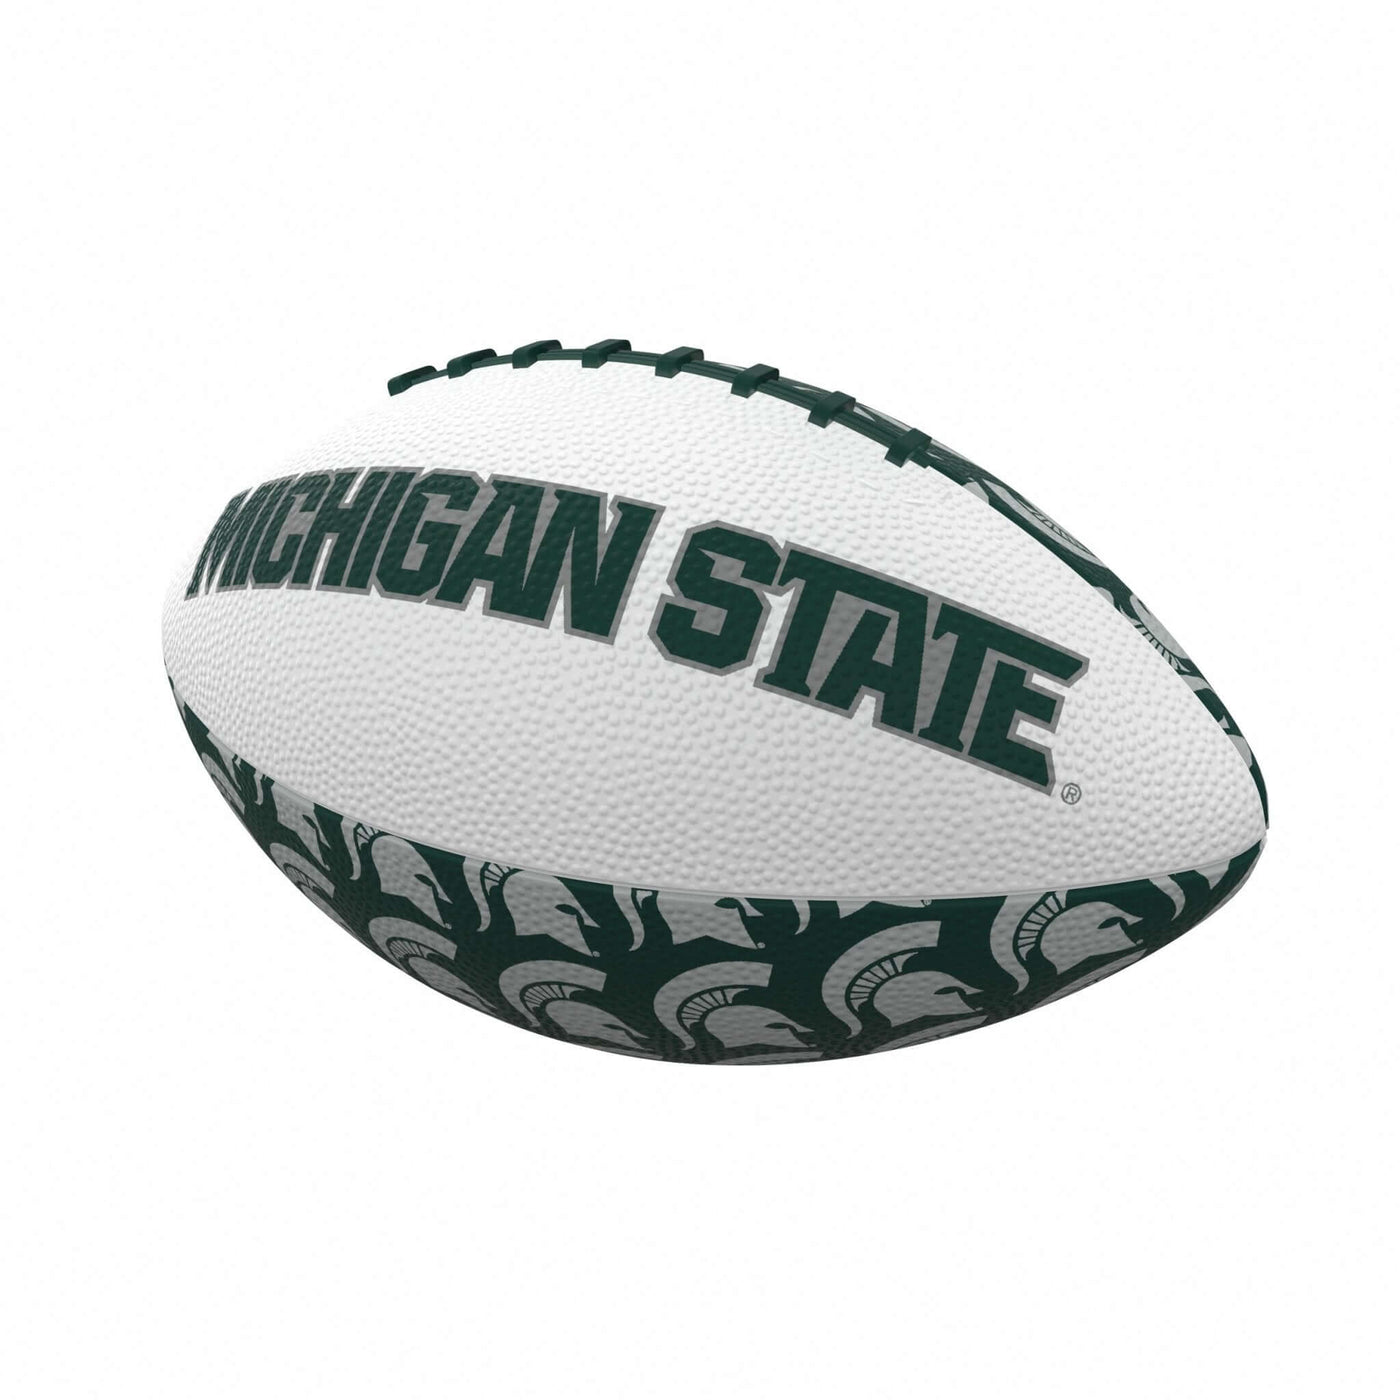 MI State Repeating Mini-Size Rubber Football - Logo Brands